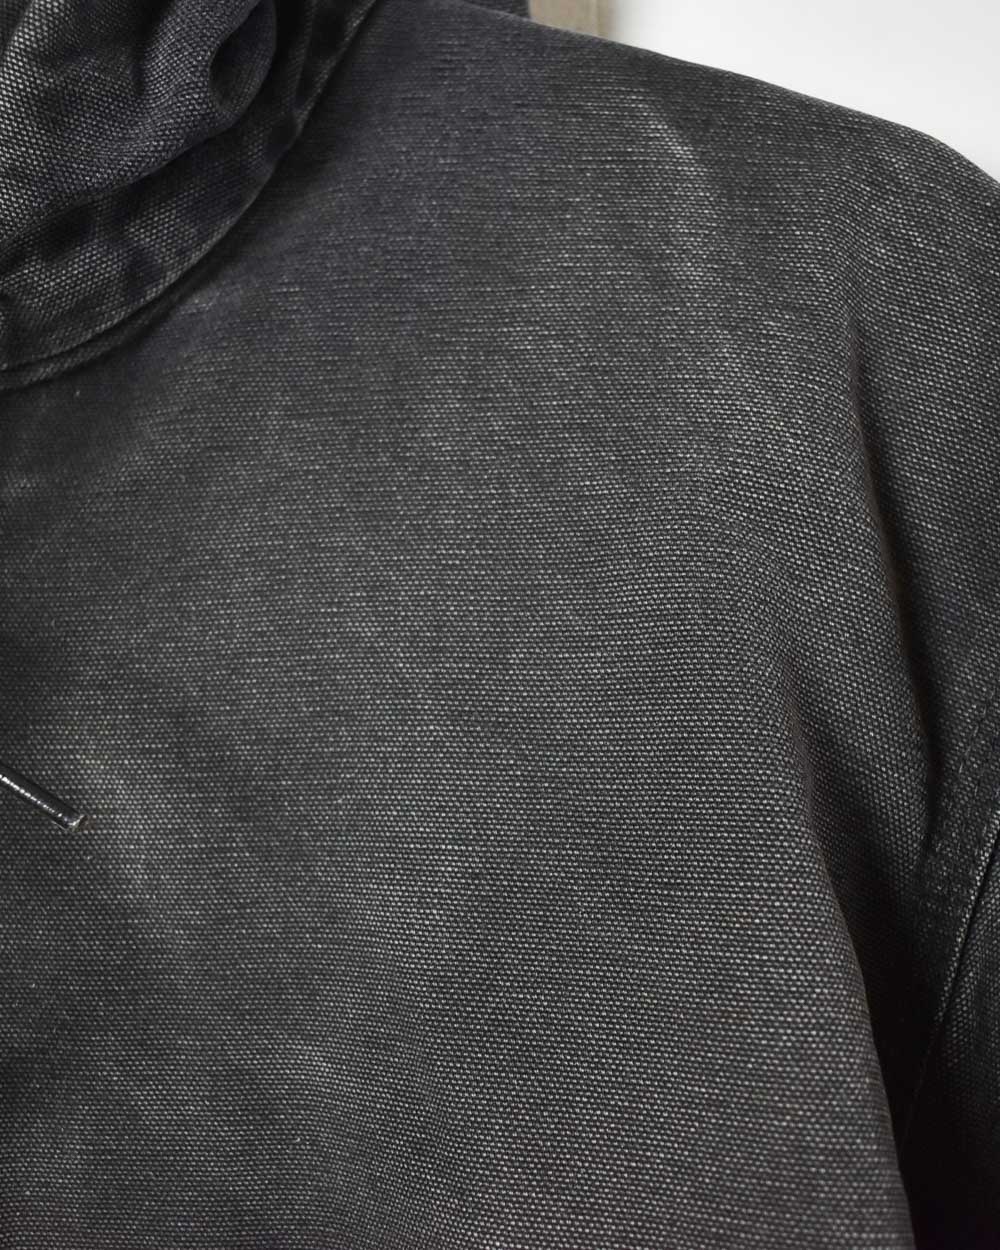 Black Carhartt Workwear Hooded Detroit Jacket - Medium